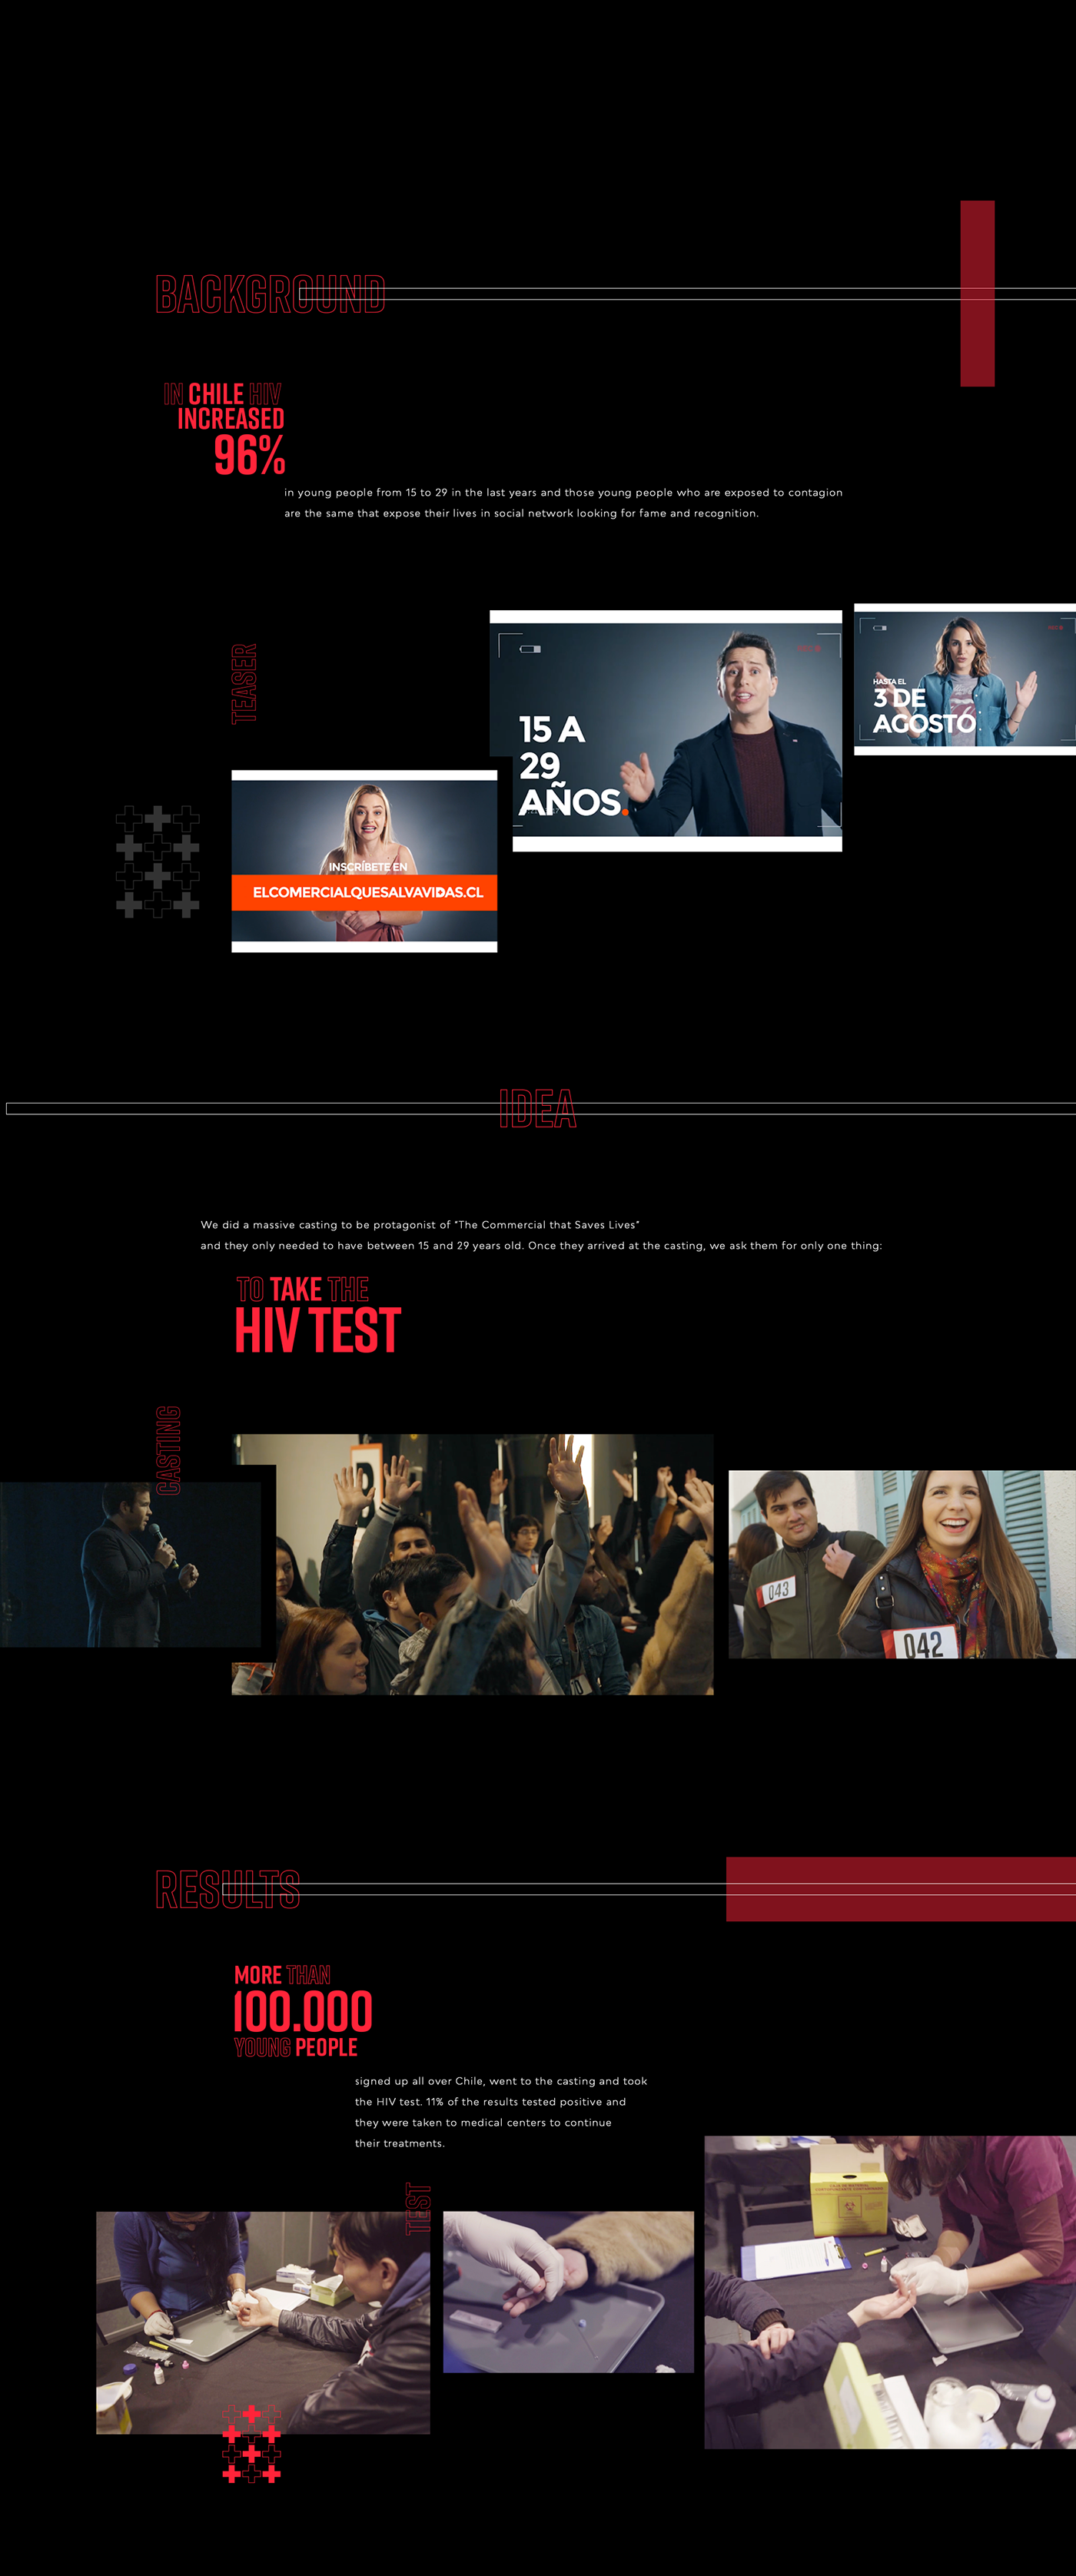 hiv Gobierno chile VIH sida Ministerio Spot case ad publicidad